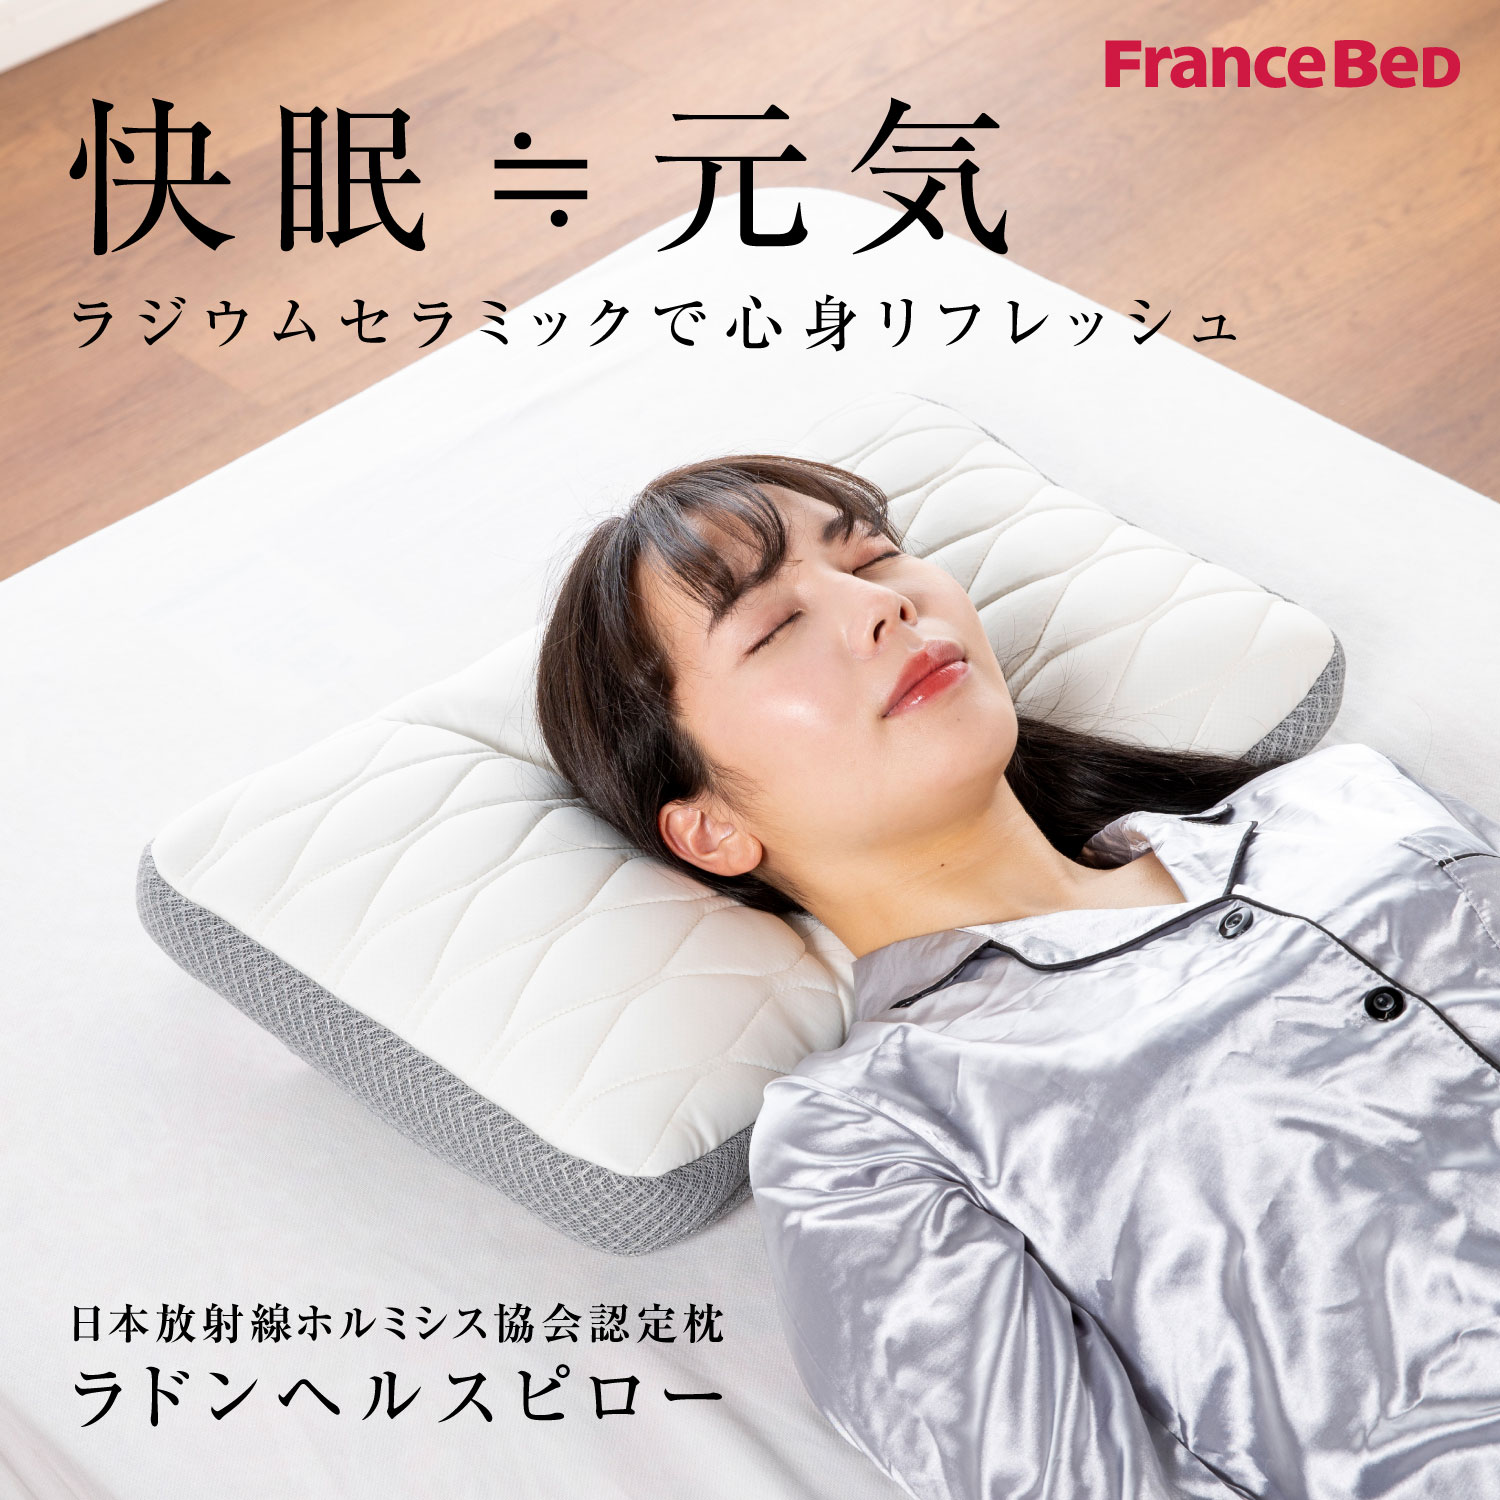 SHIZU-KAGU / 【France Bed】ラドンヘルスピロー